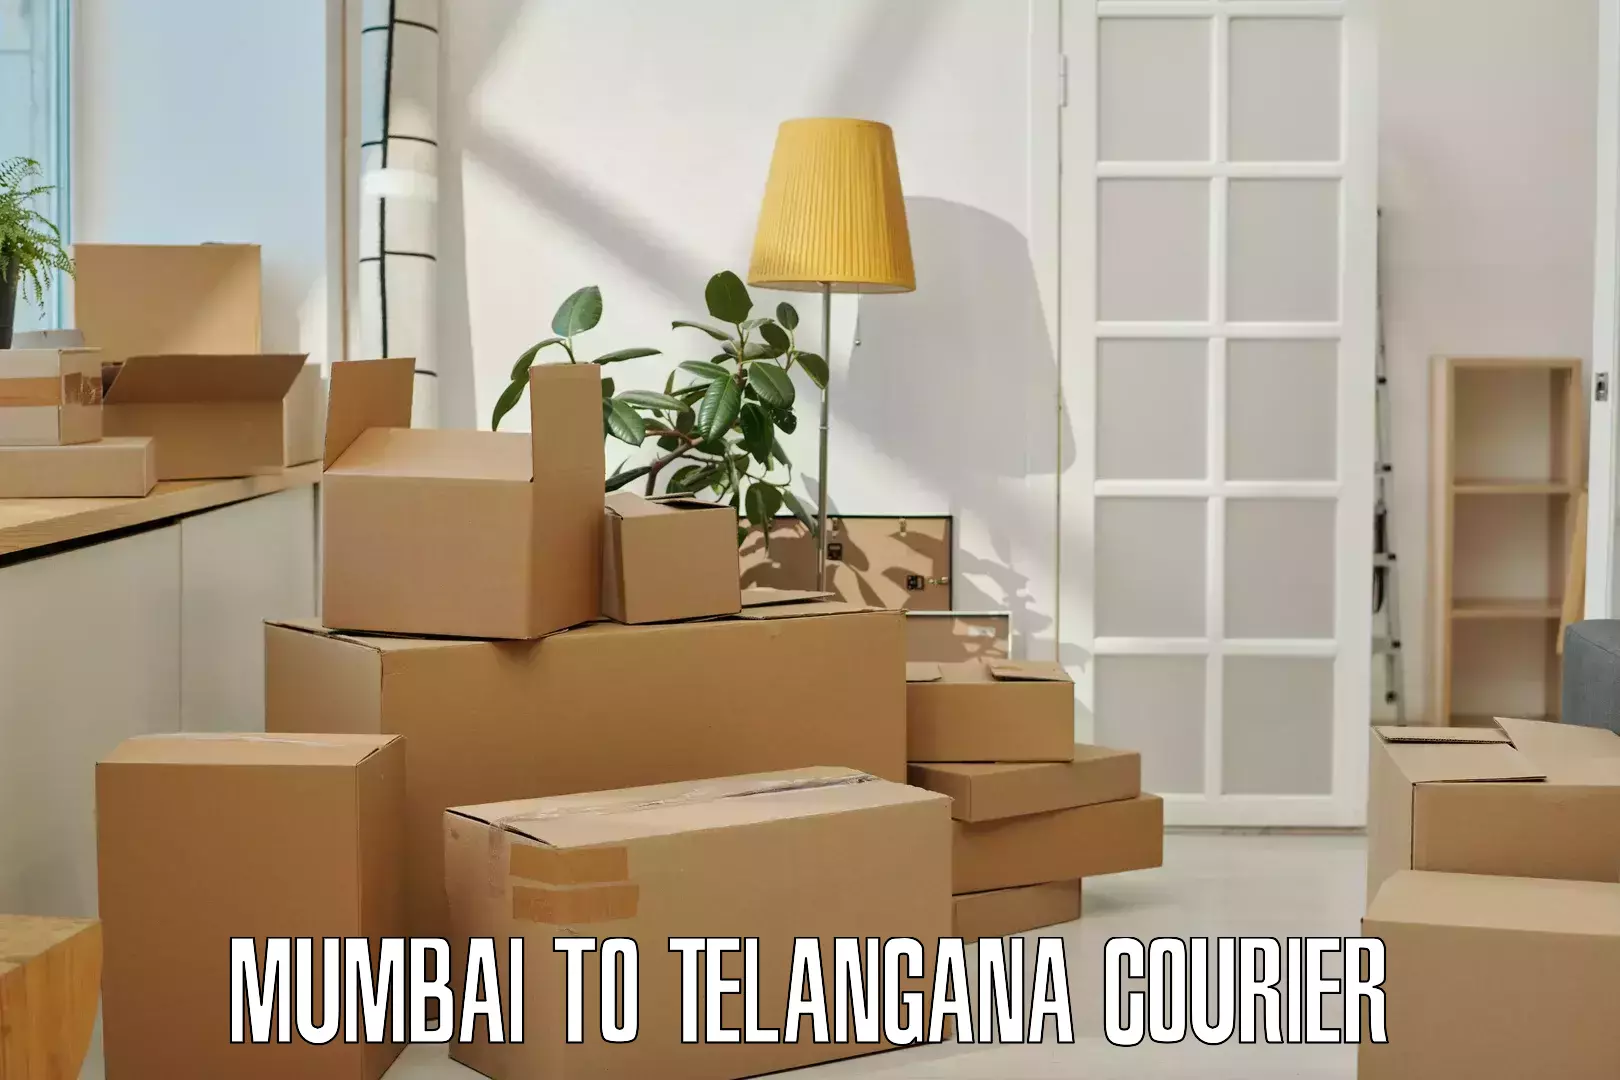 Courier tracking online Mumbai to Balanagar